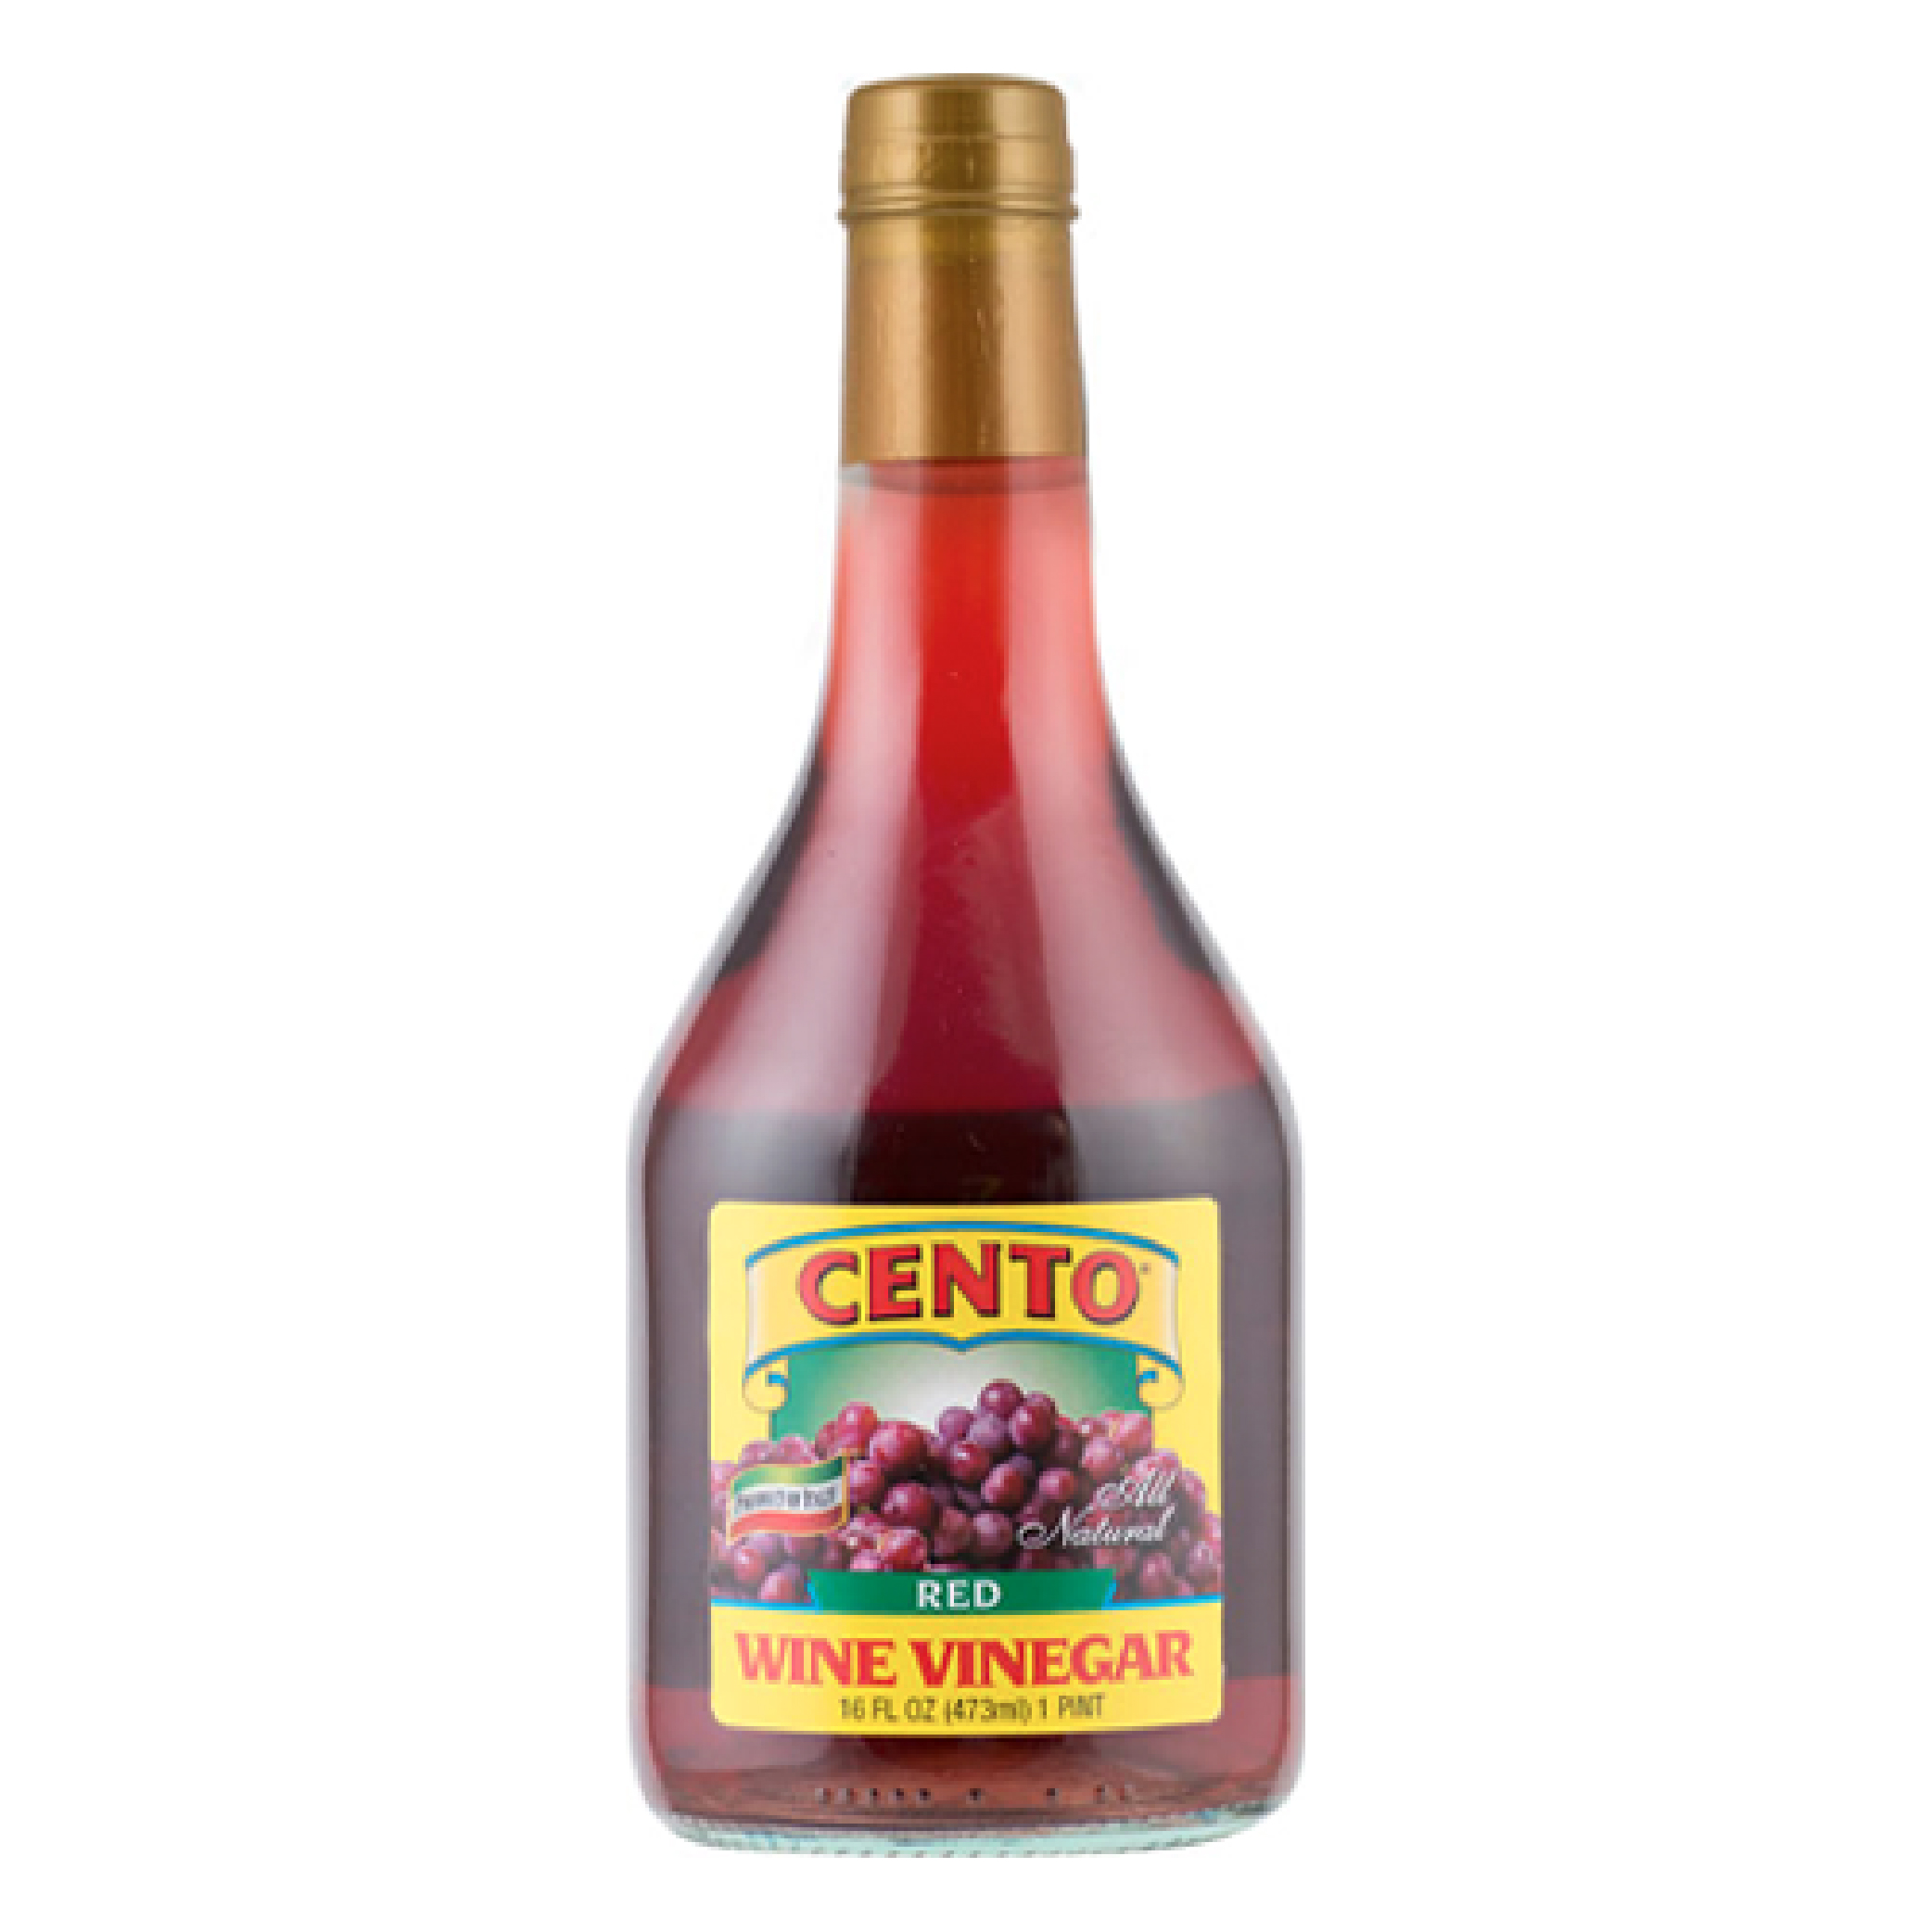 Cento Red Wine Vinegar - Product